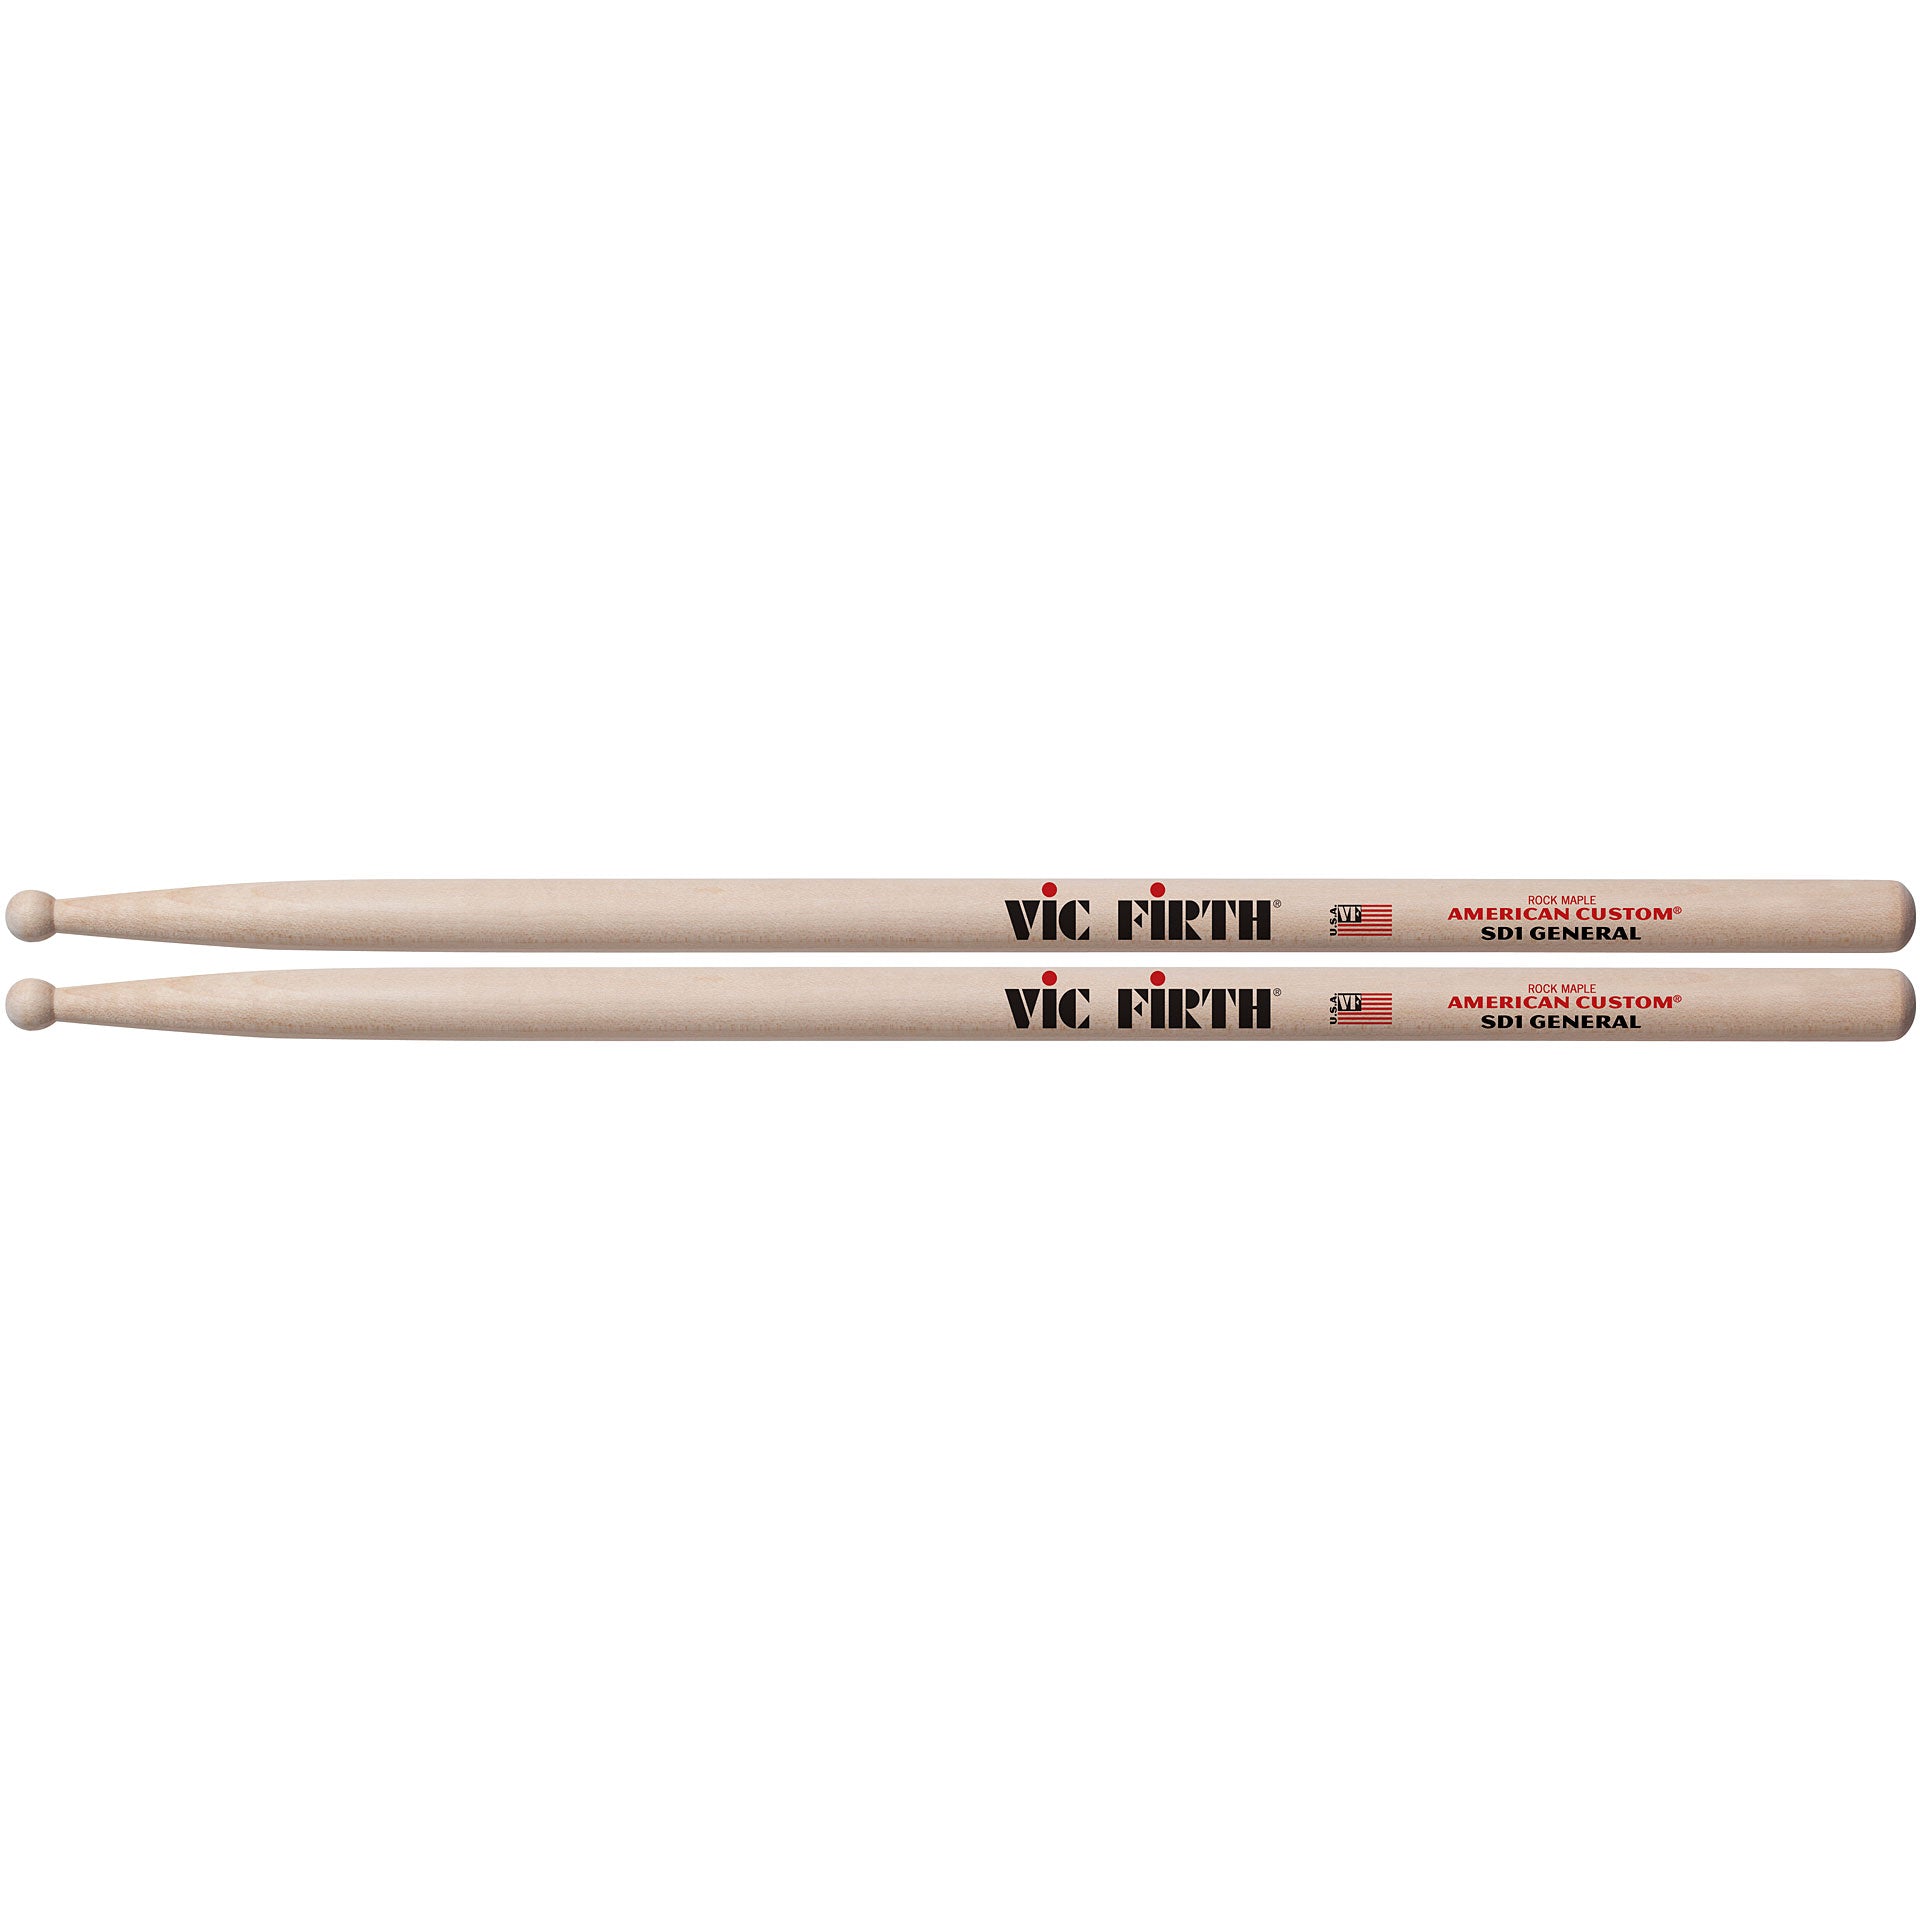 Vic Firth American Custom Drumsticks - SD1 General - Rock Maple (1 Pair)